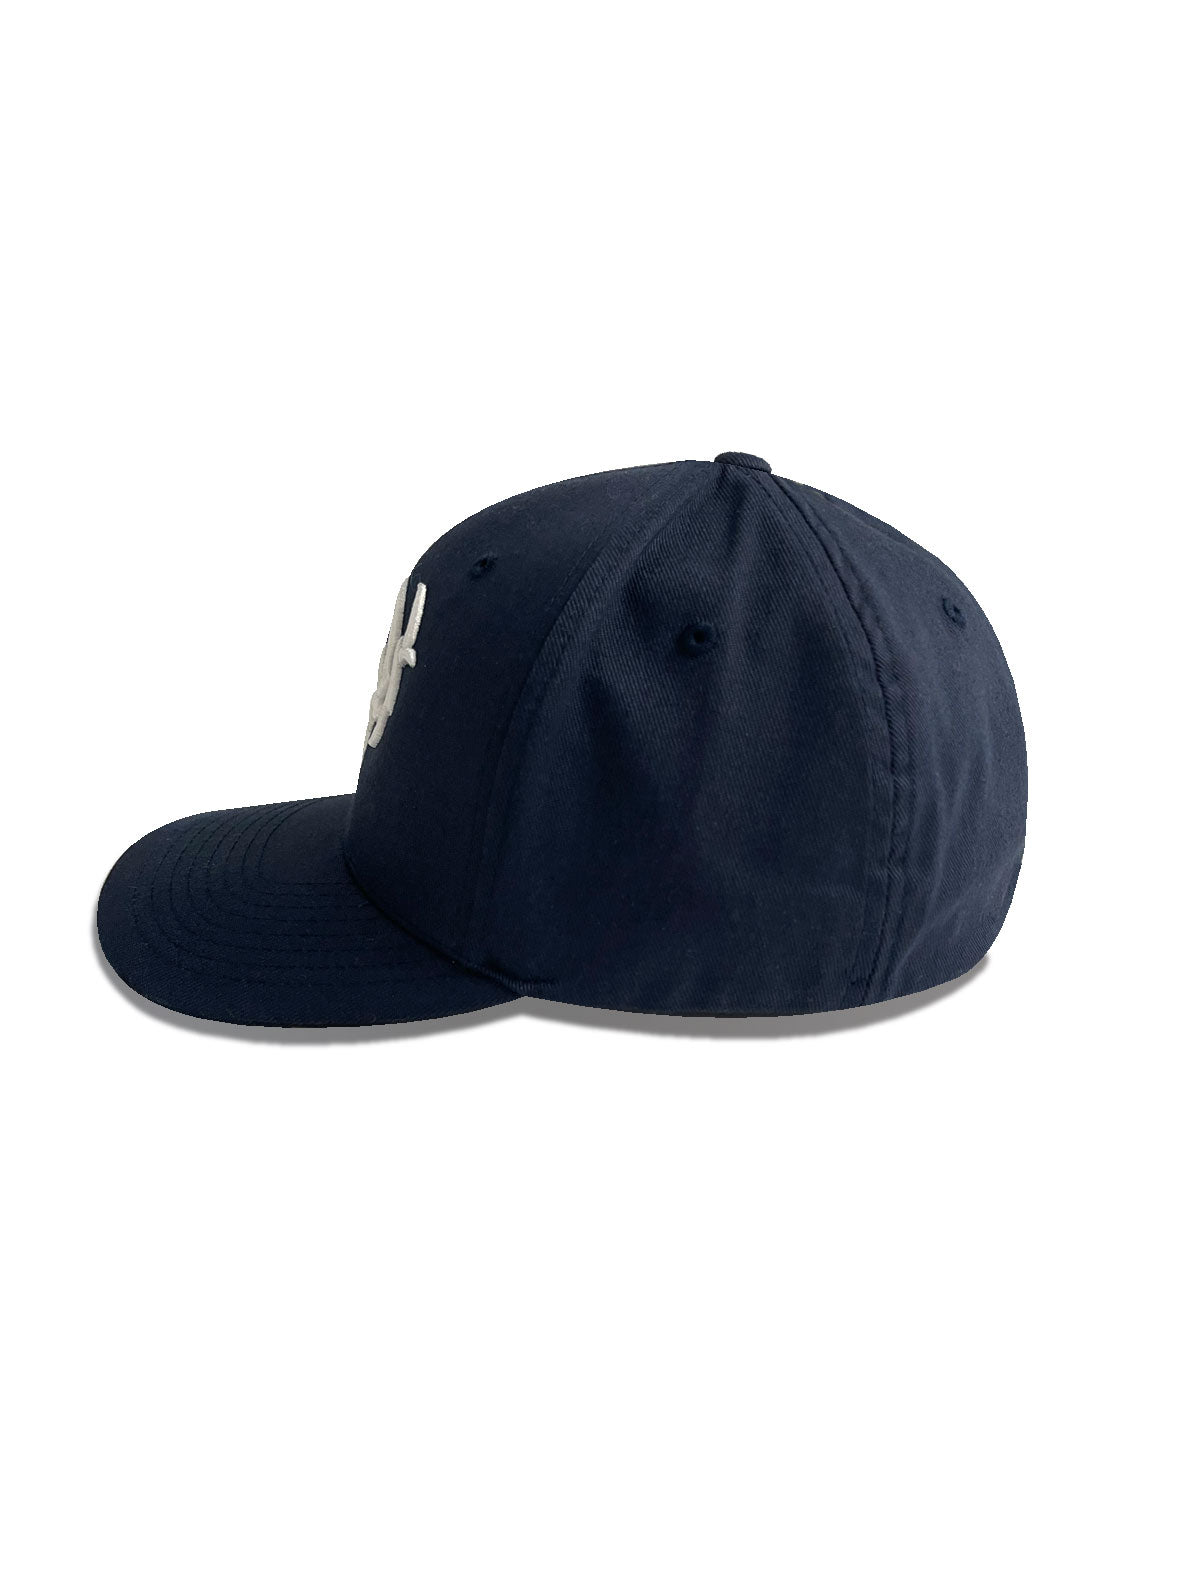 Eastwood Navy Flex Hat (Adult S to XXL Sizes)